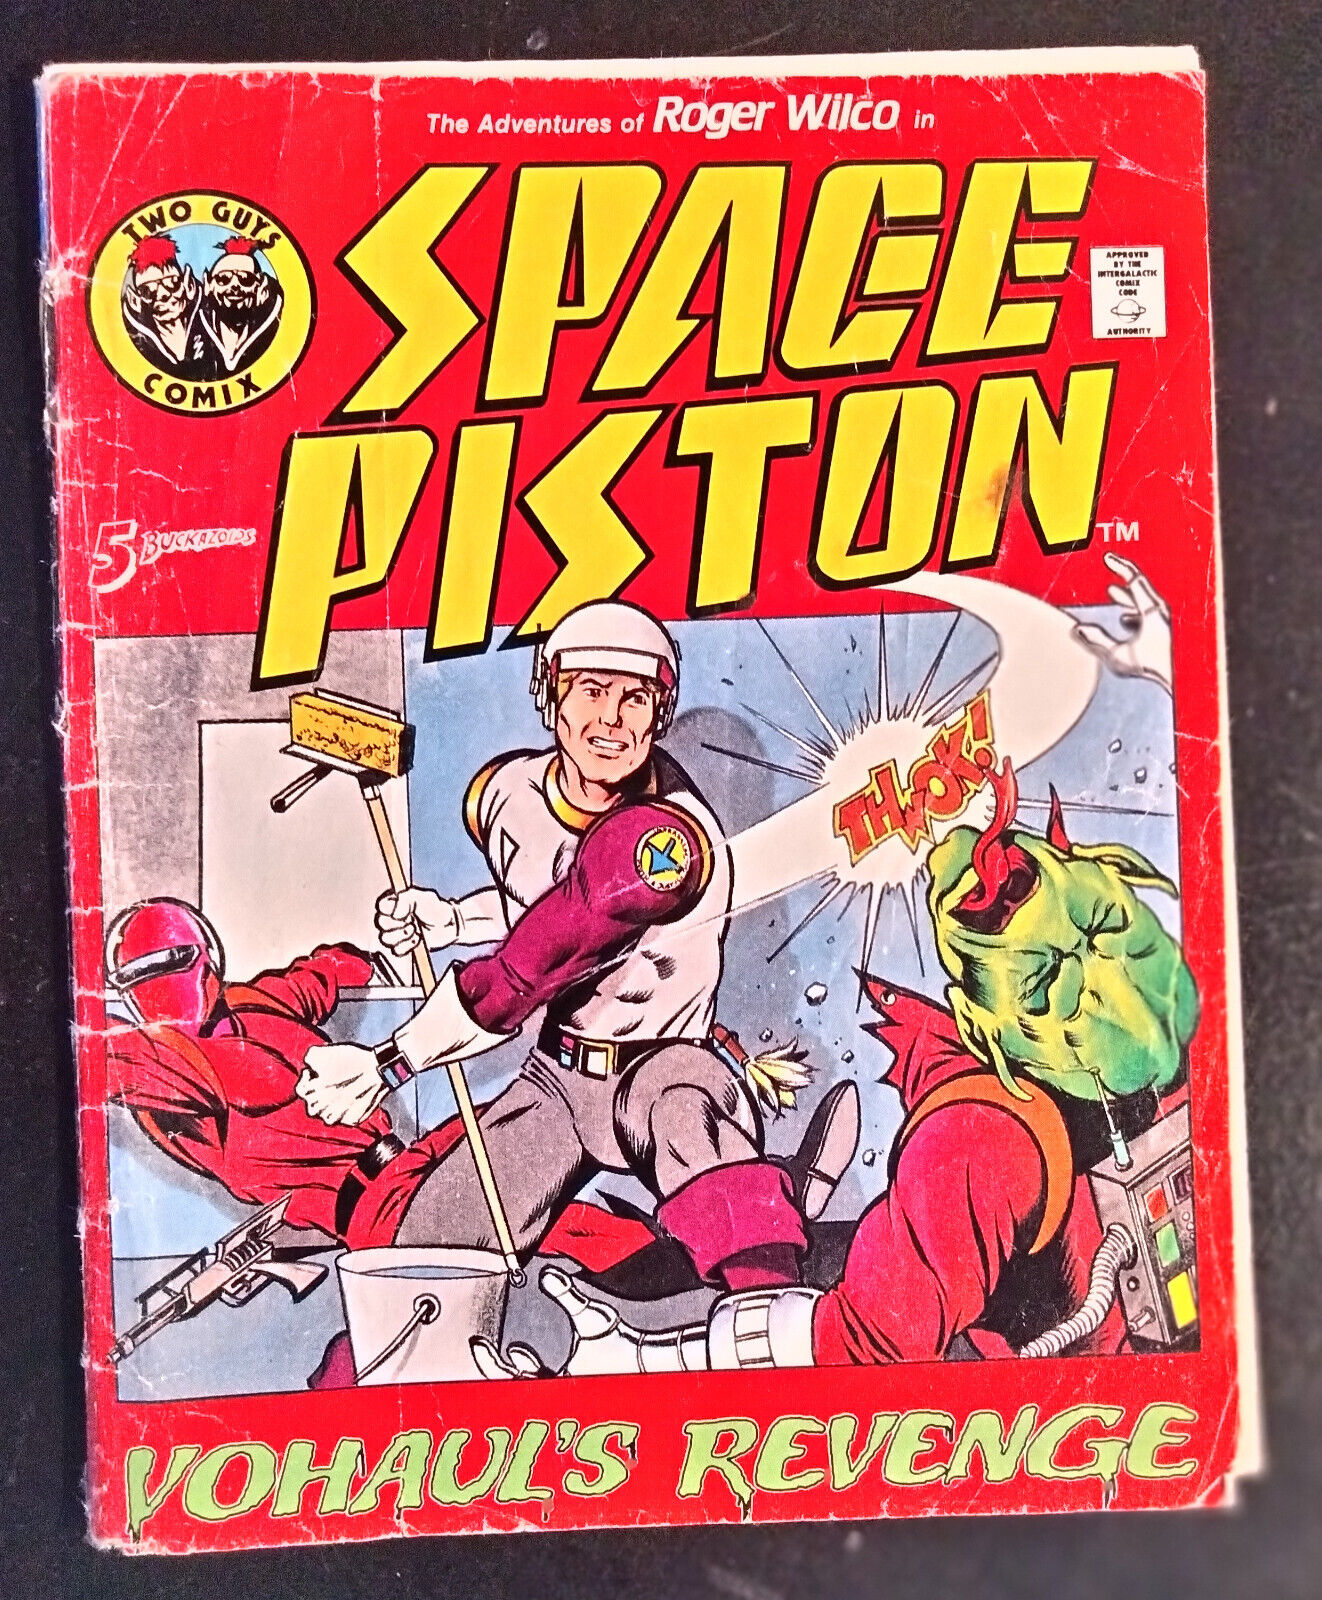 Space Piston Space Quest II video game comic book vintage Sierra survivor 1987